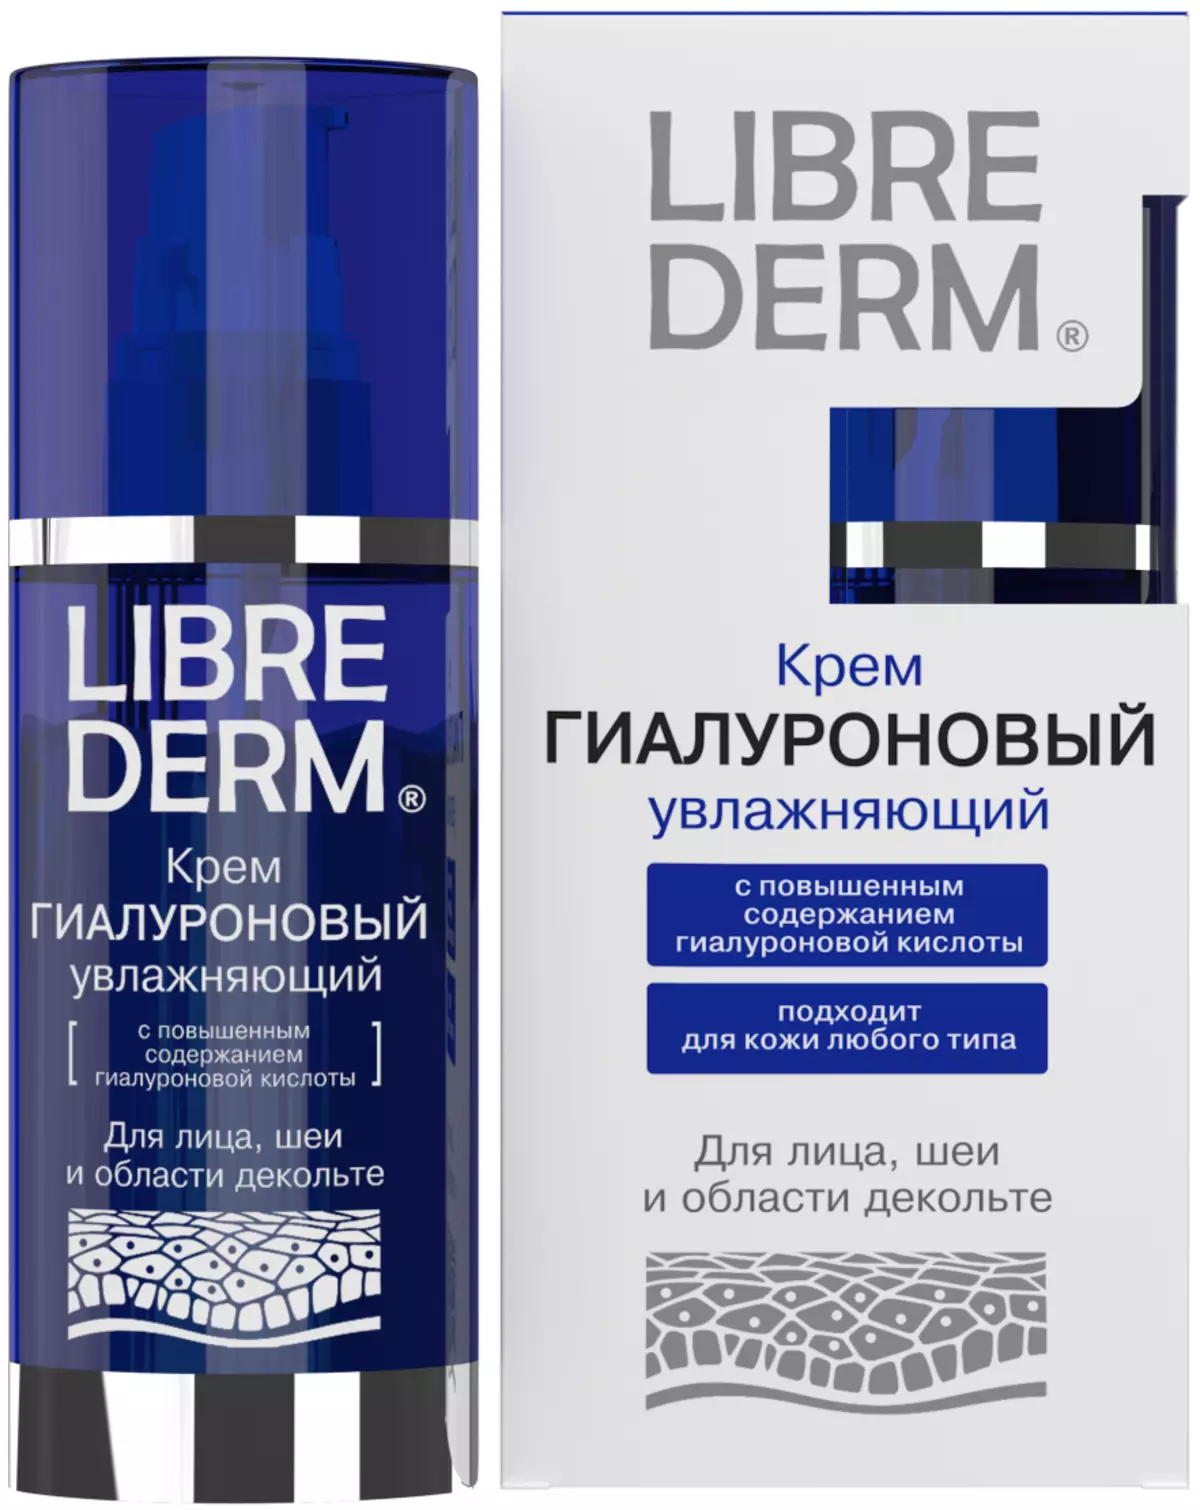 Librederm化妝品：用透明質酸和其他產品的面孔選擇資金。評論美容師和買家 4395_14